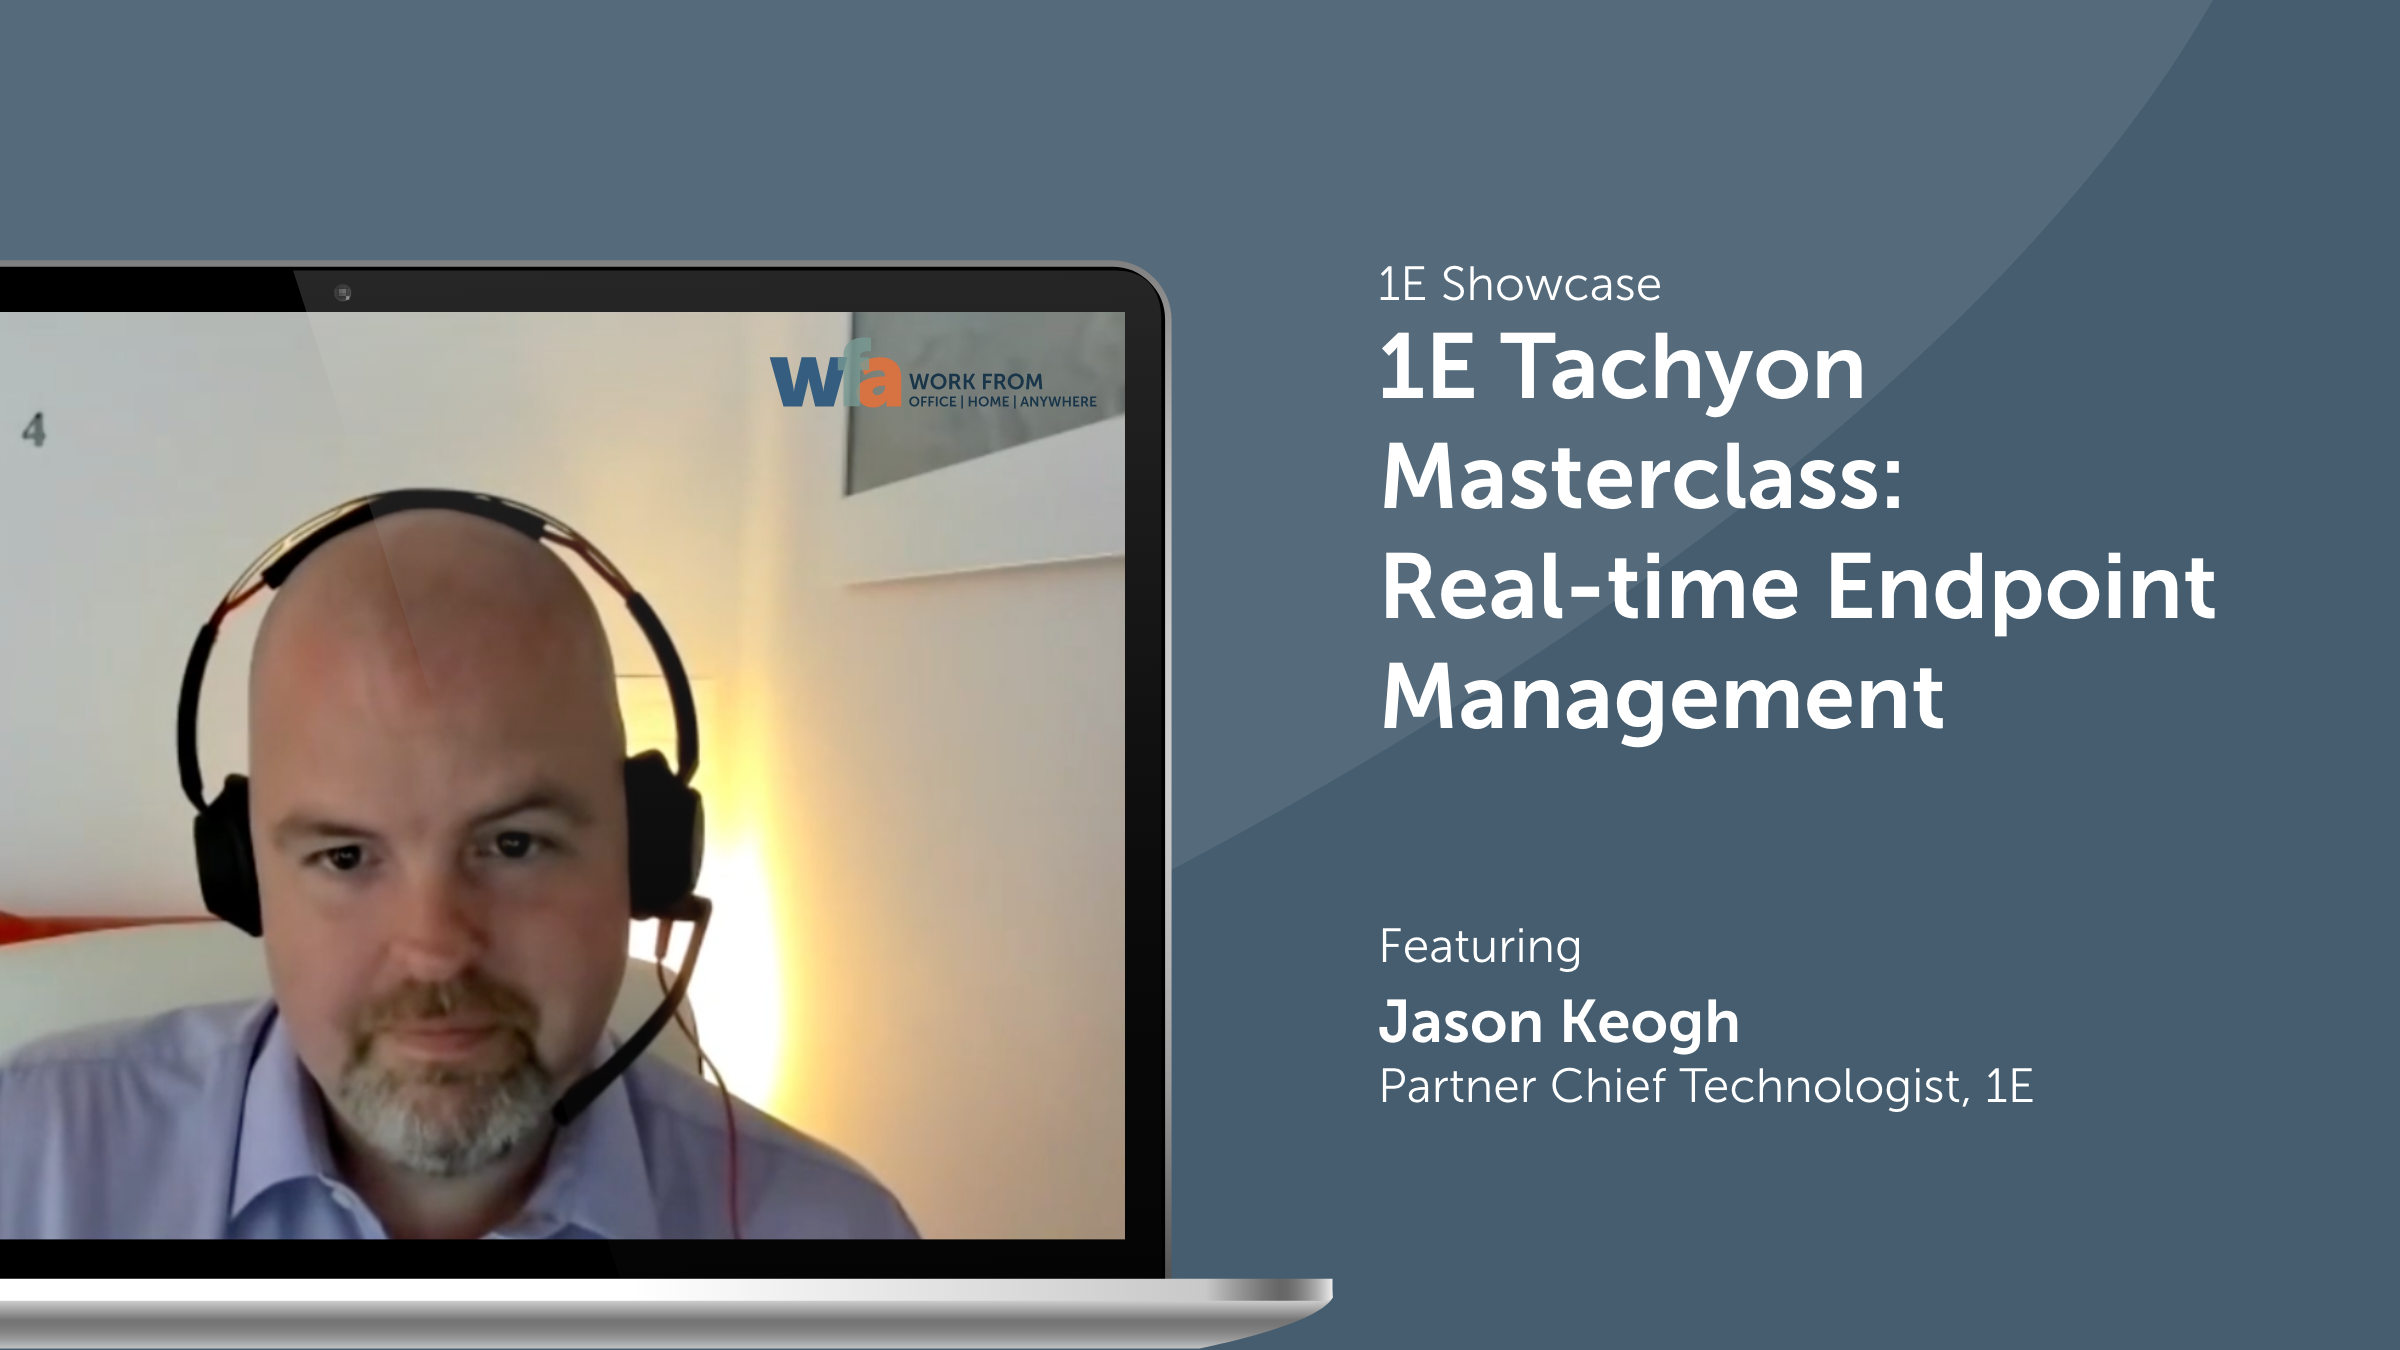 1E Tachyon Masterclass: Real-time Endpoint Management